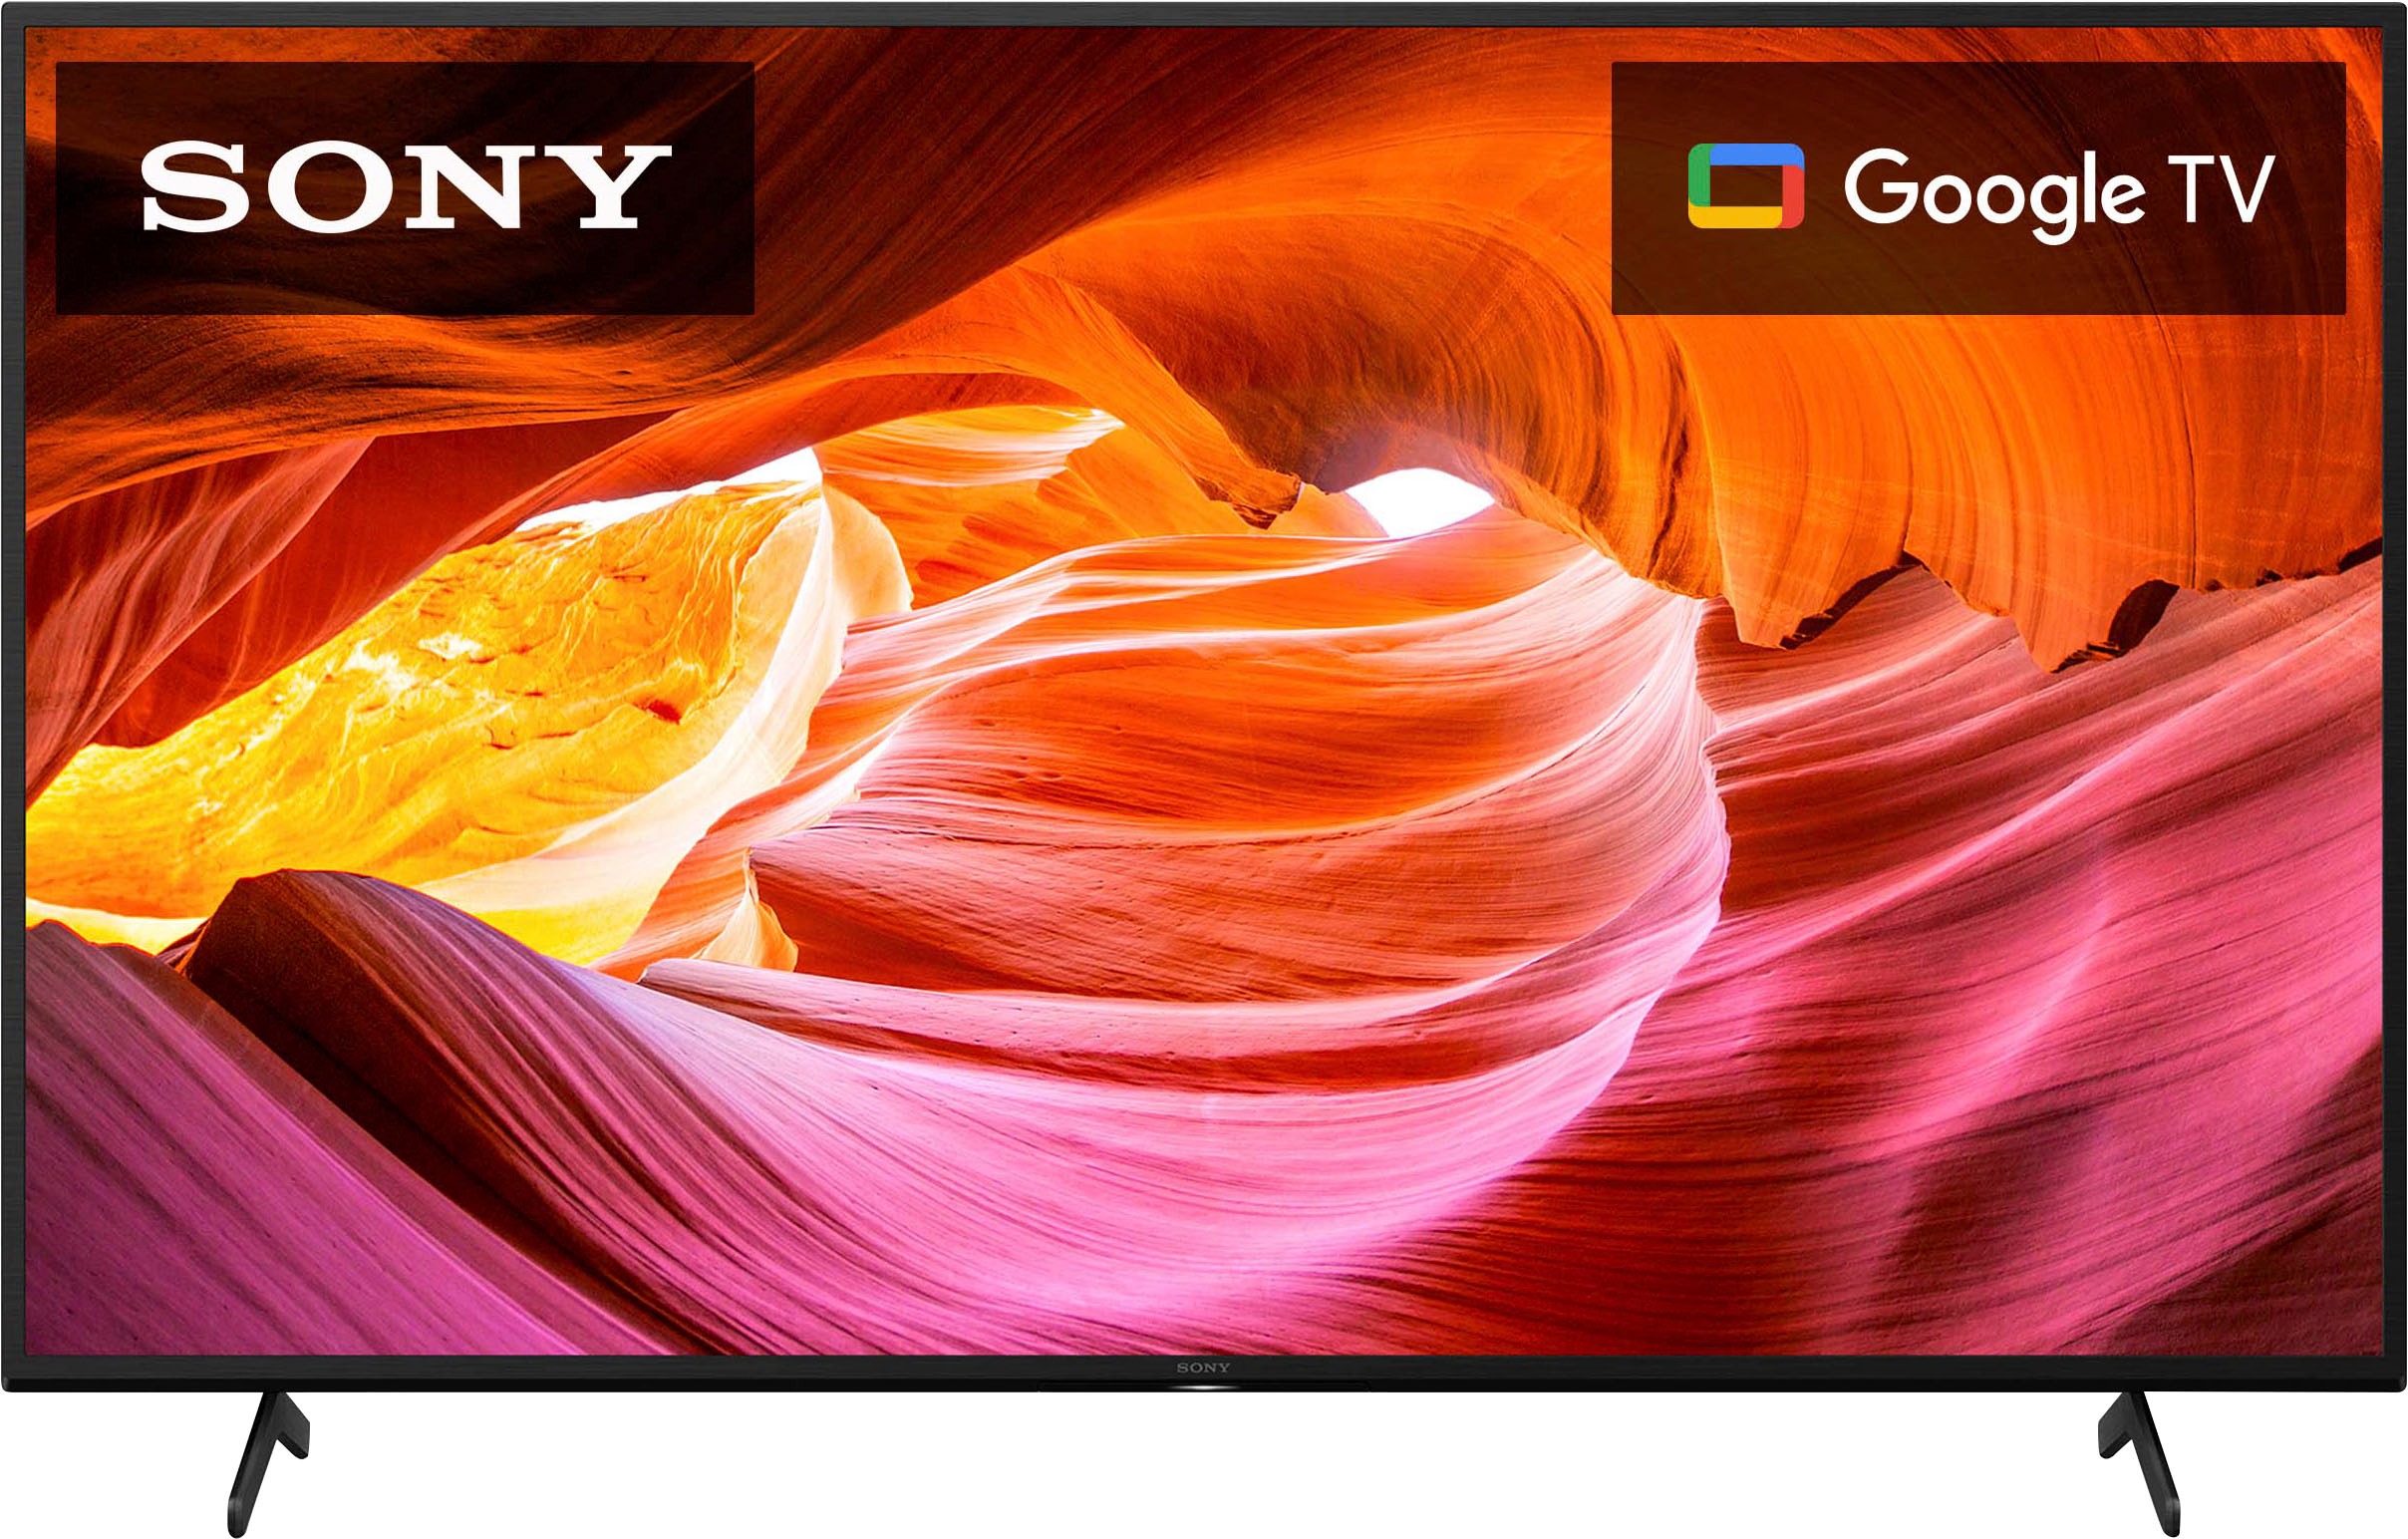 Sony 55" Class X75K 4K HDR LED Google TV $450